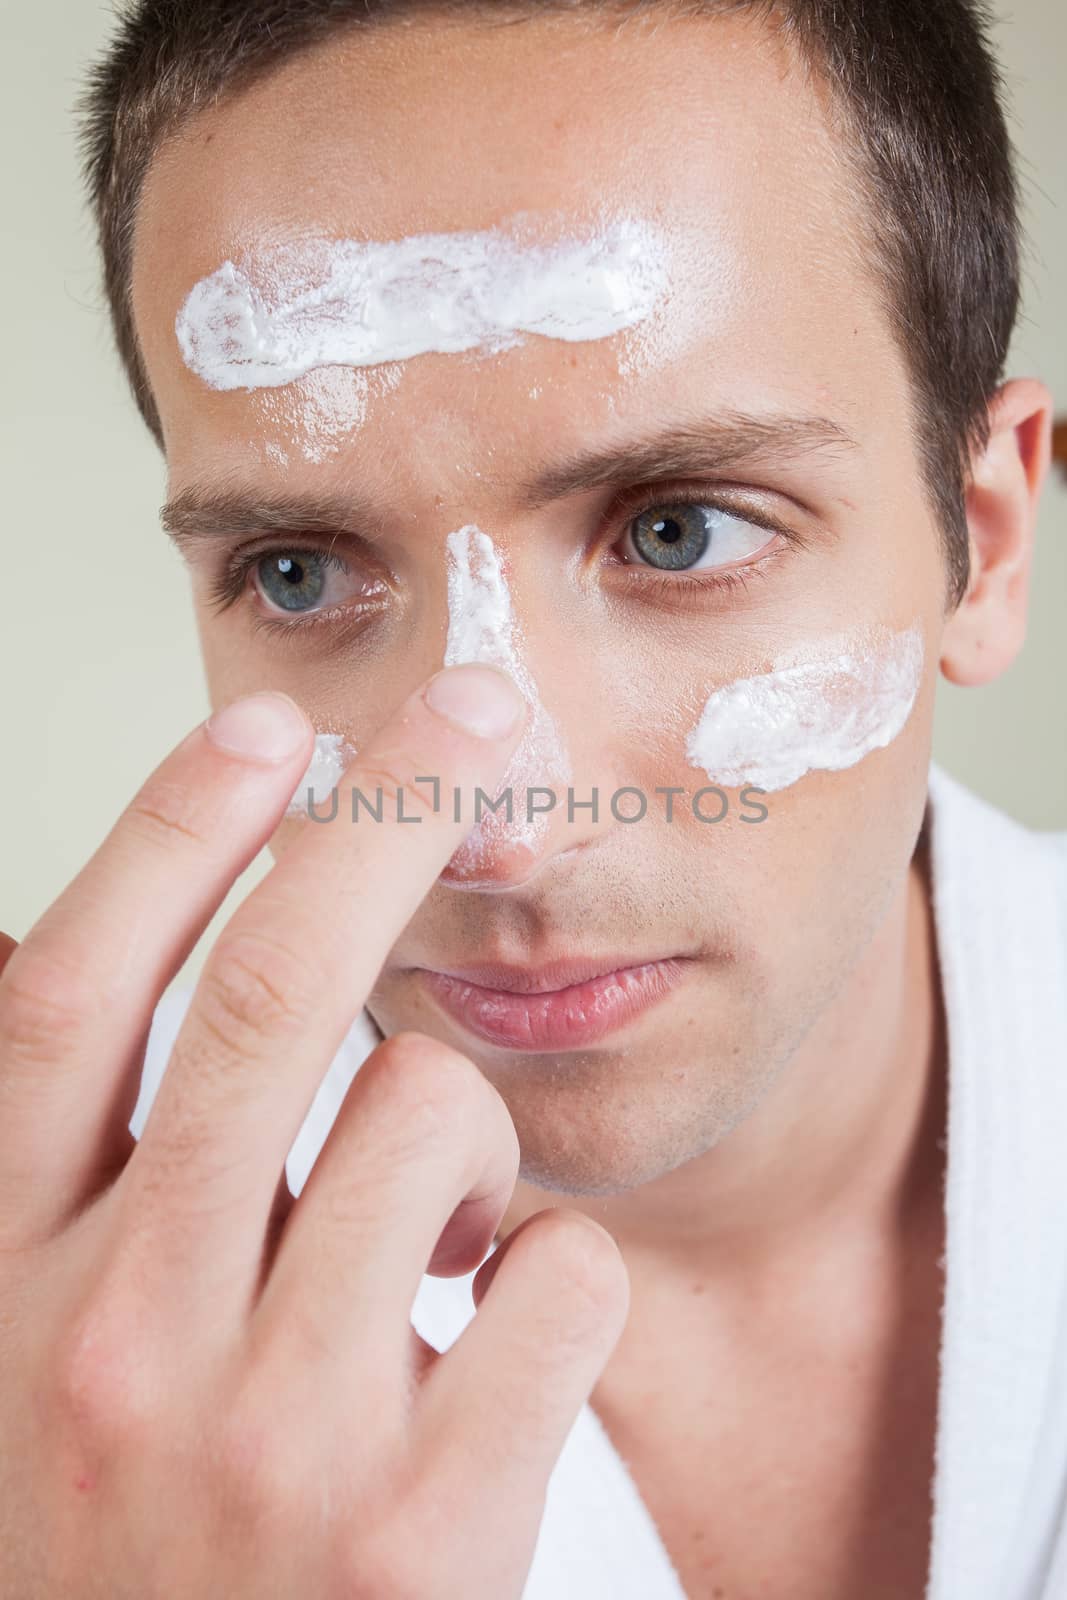 Serious man applying face cream